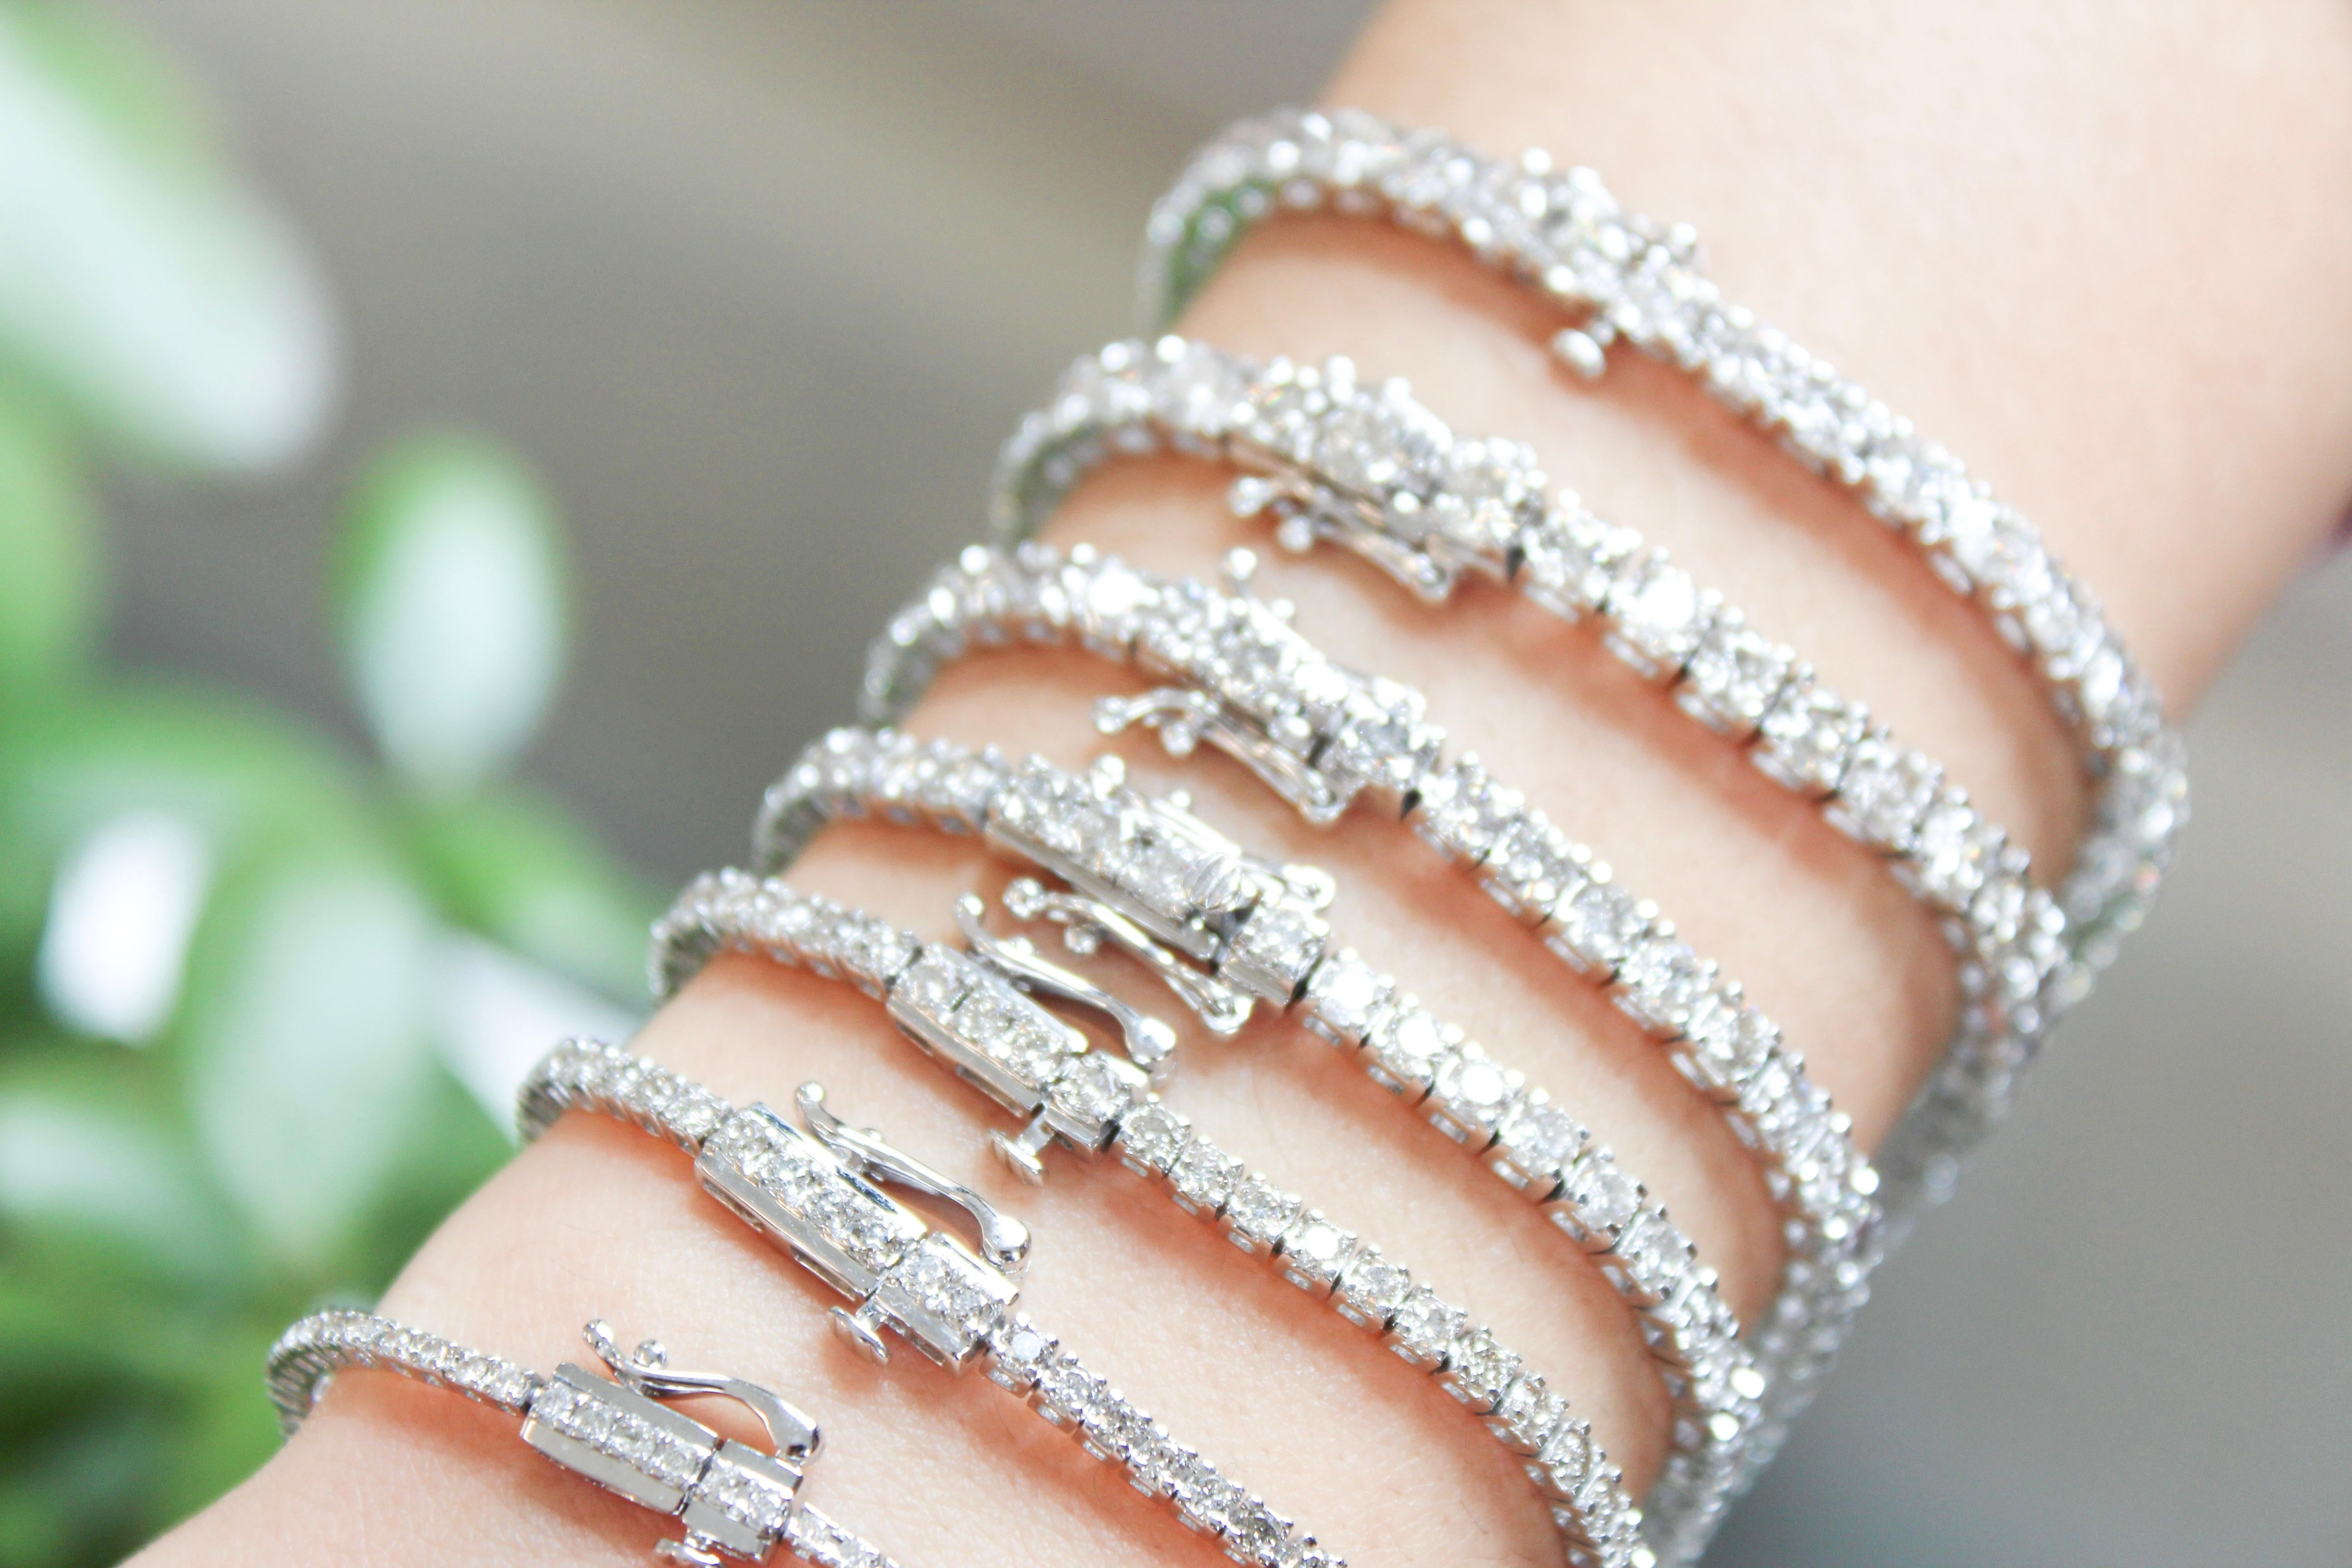 10 carat diamond bracelet